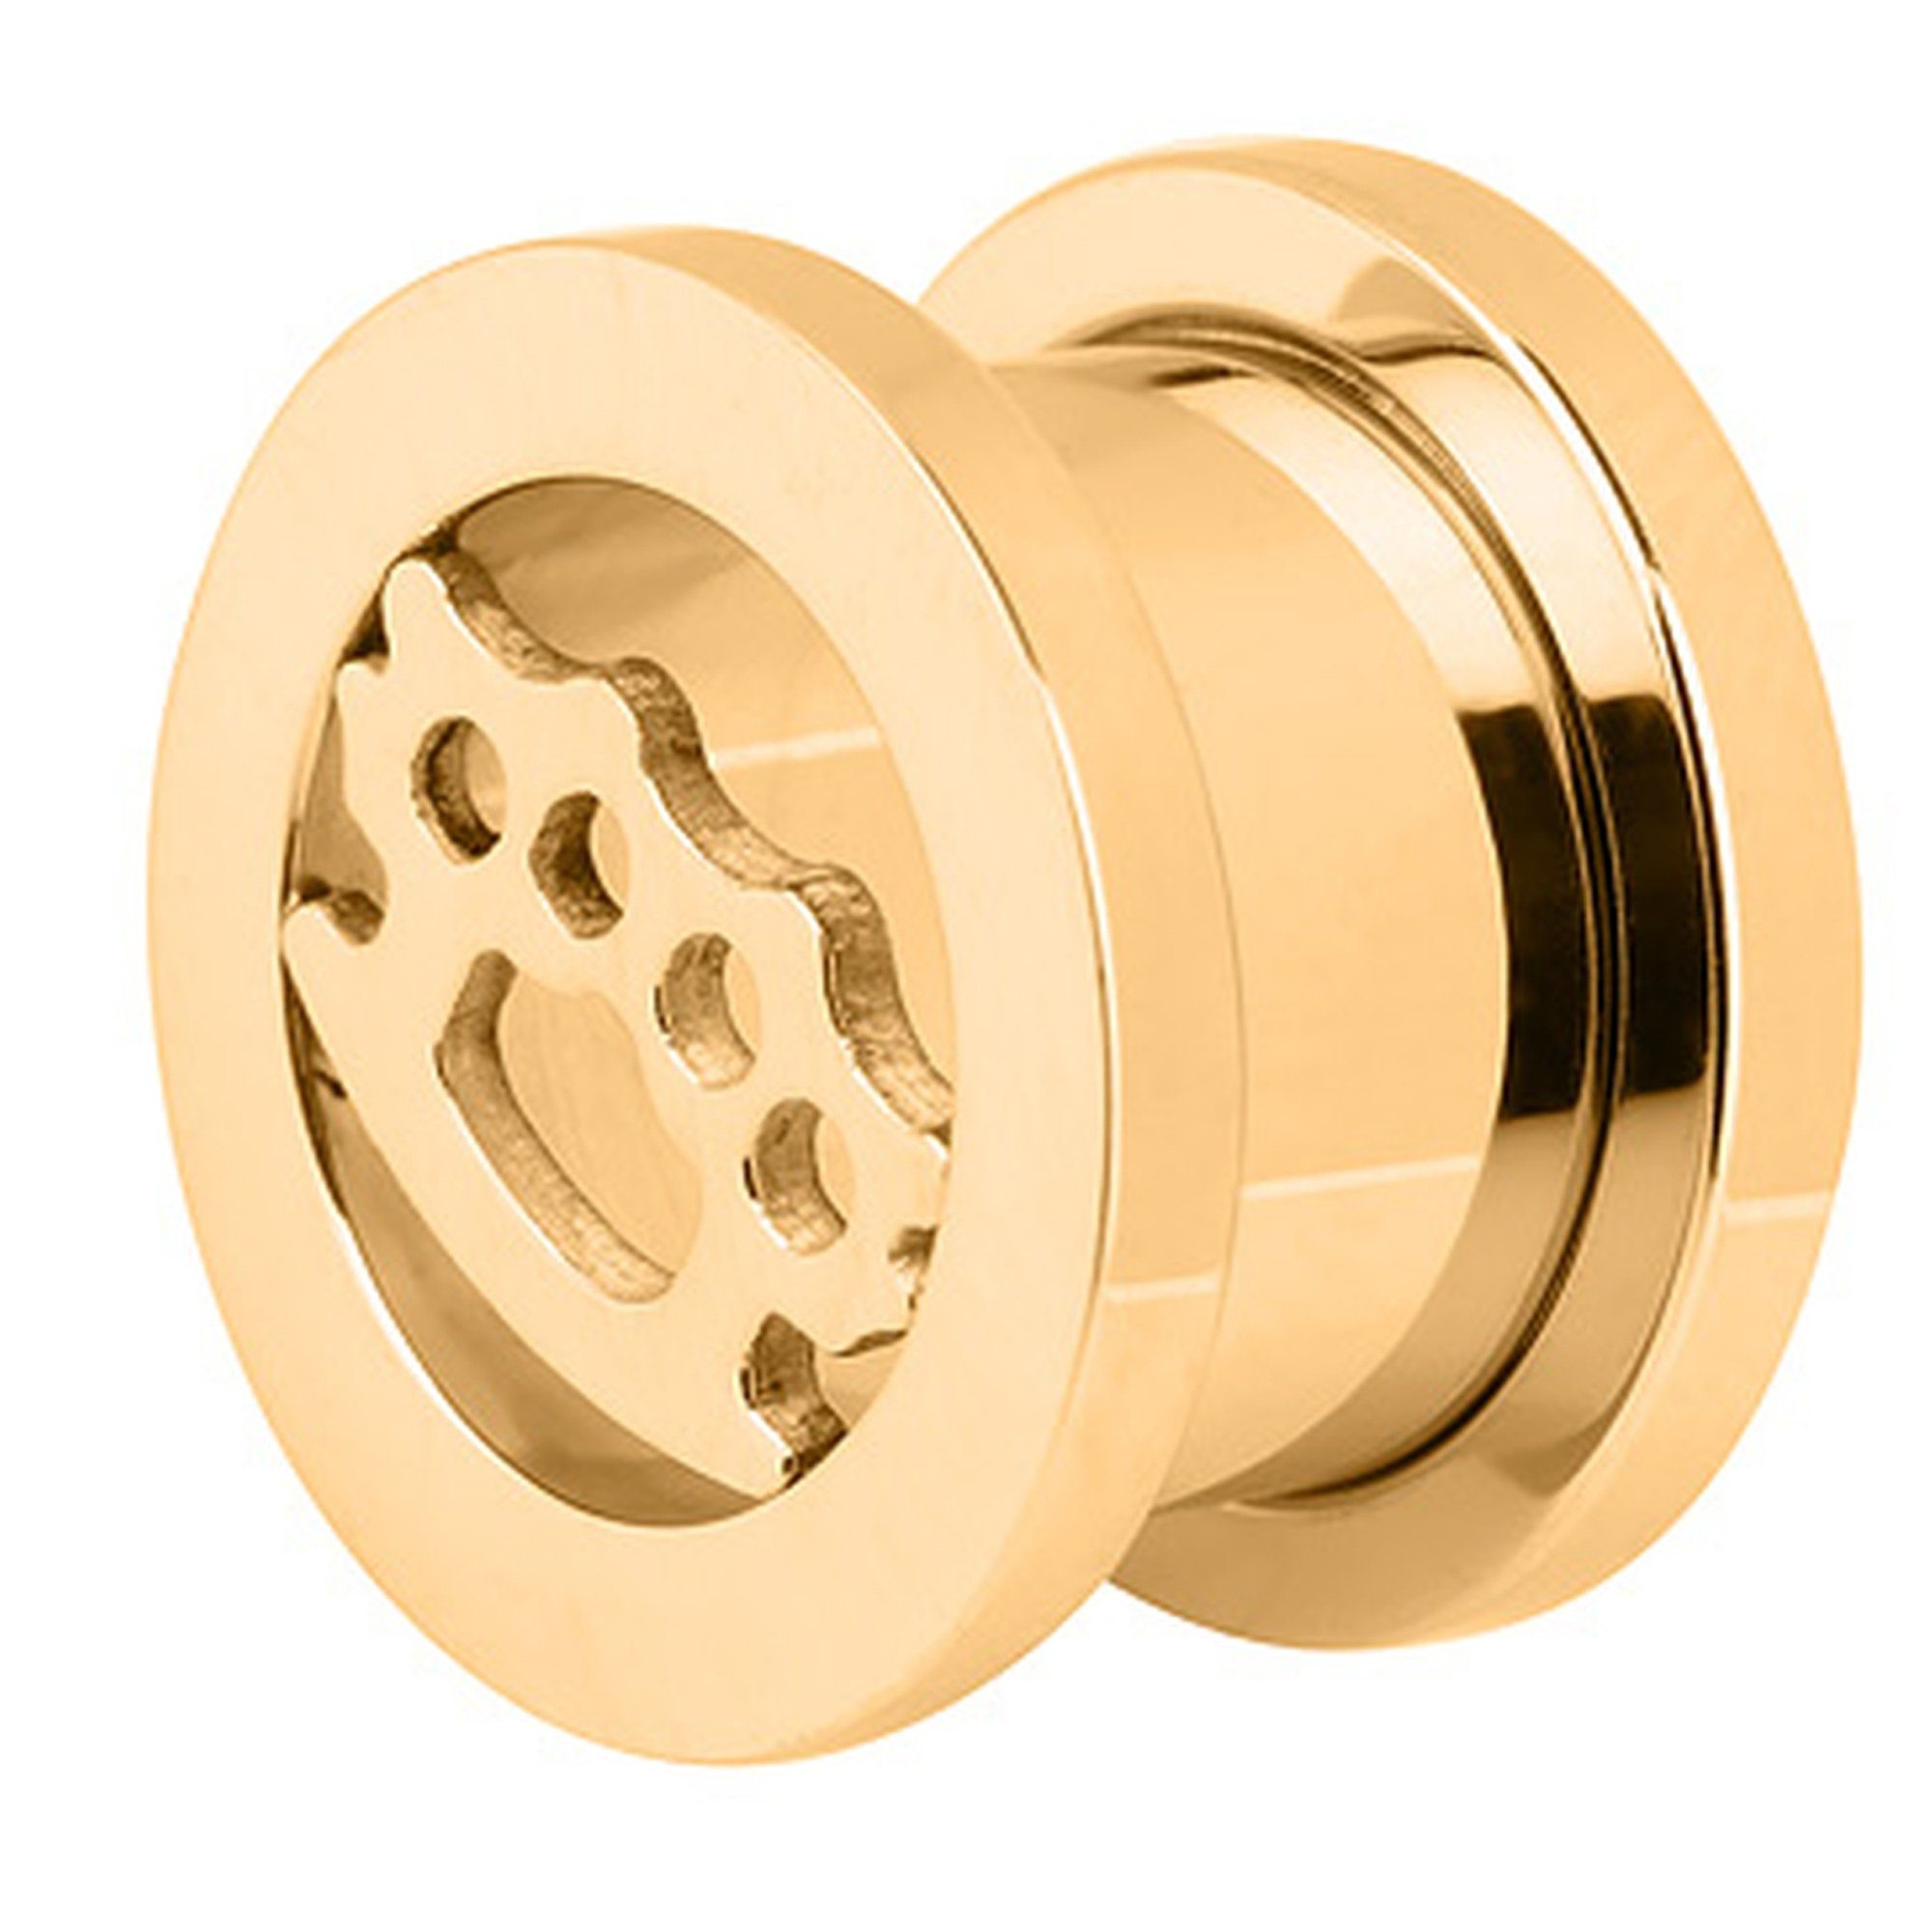 Taffstyle Plug Piercing Edelstahl Schlagring Style, Flesh Schraub Tunnel Plug Piercing Edelstahl Schlagring Style Gold